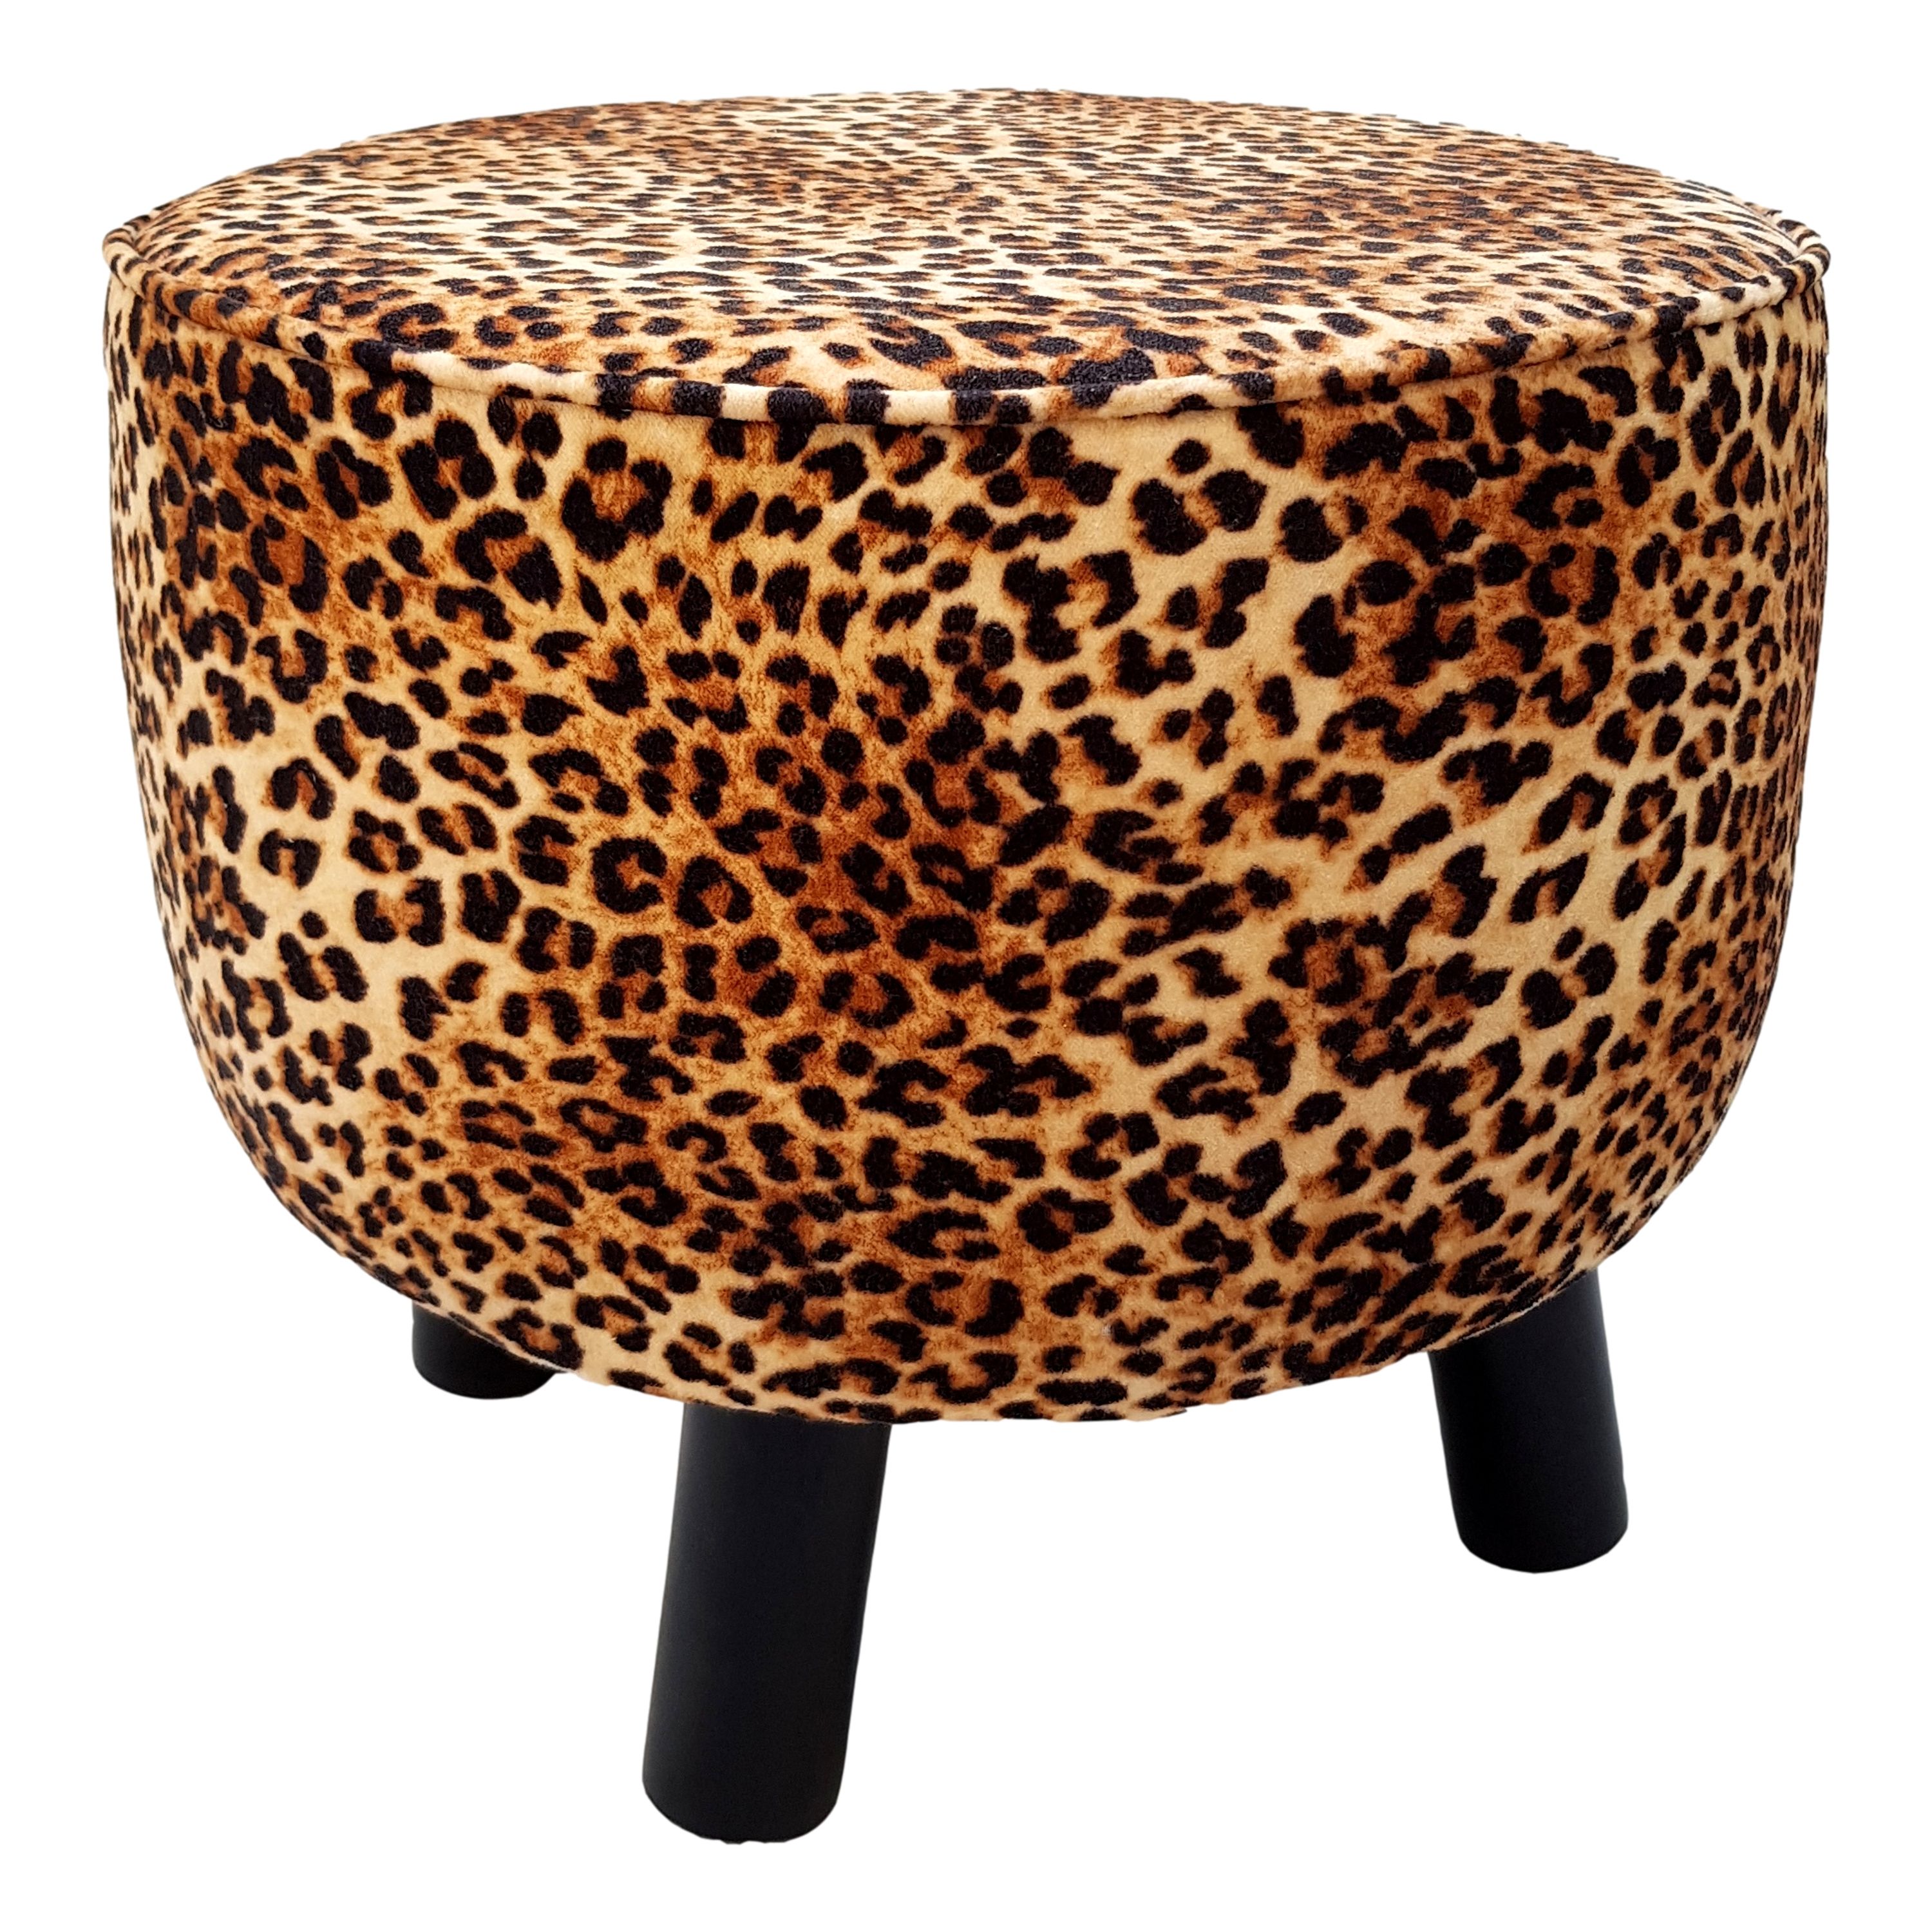 Leopard Velvet Armchair and Stool